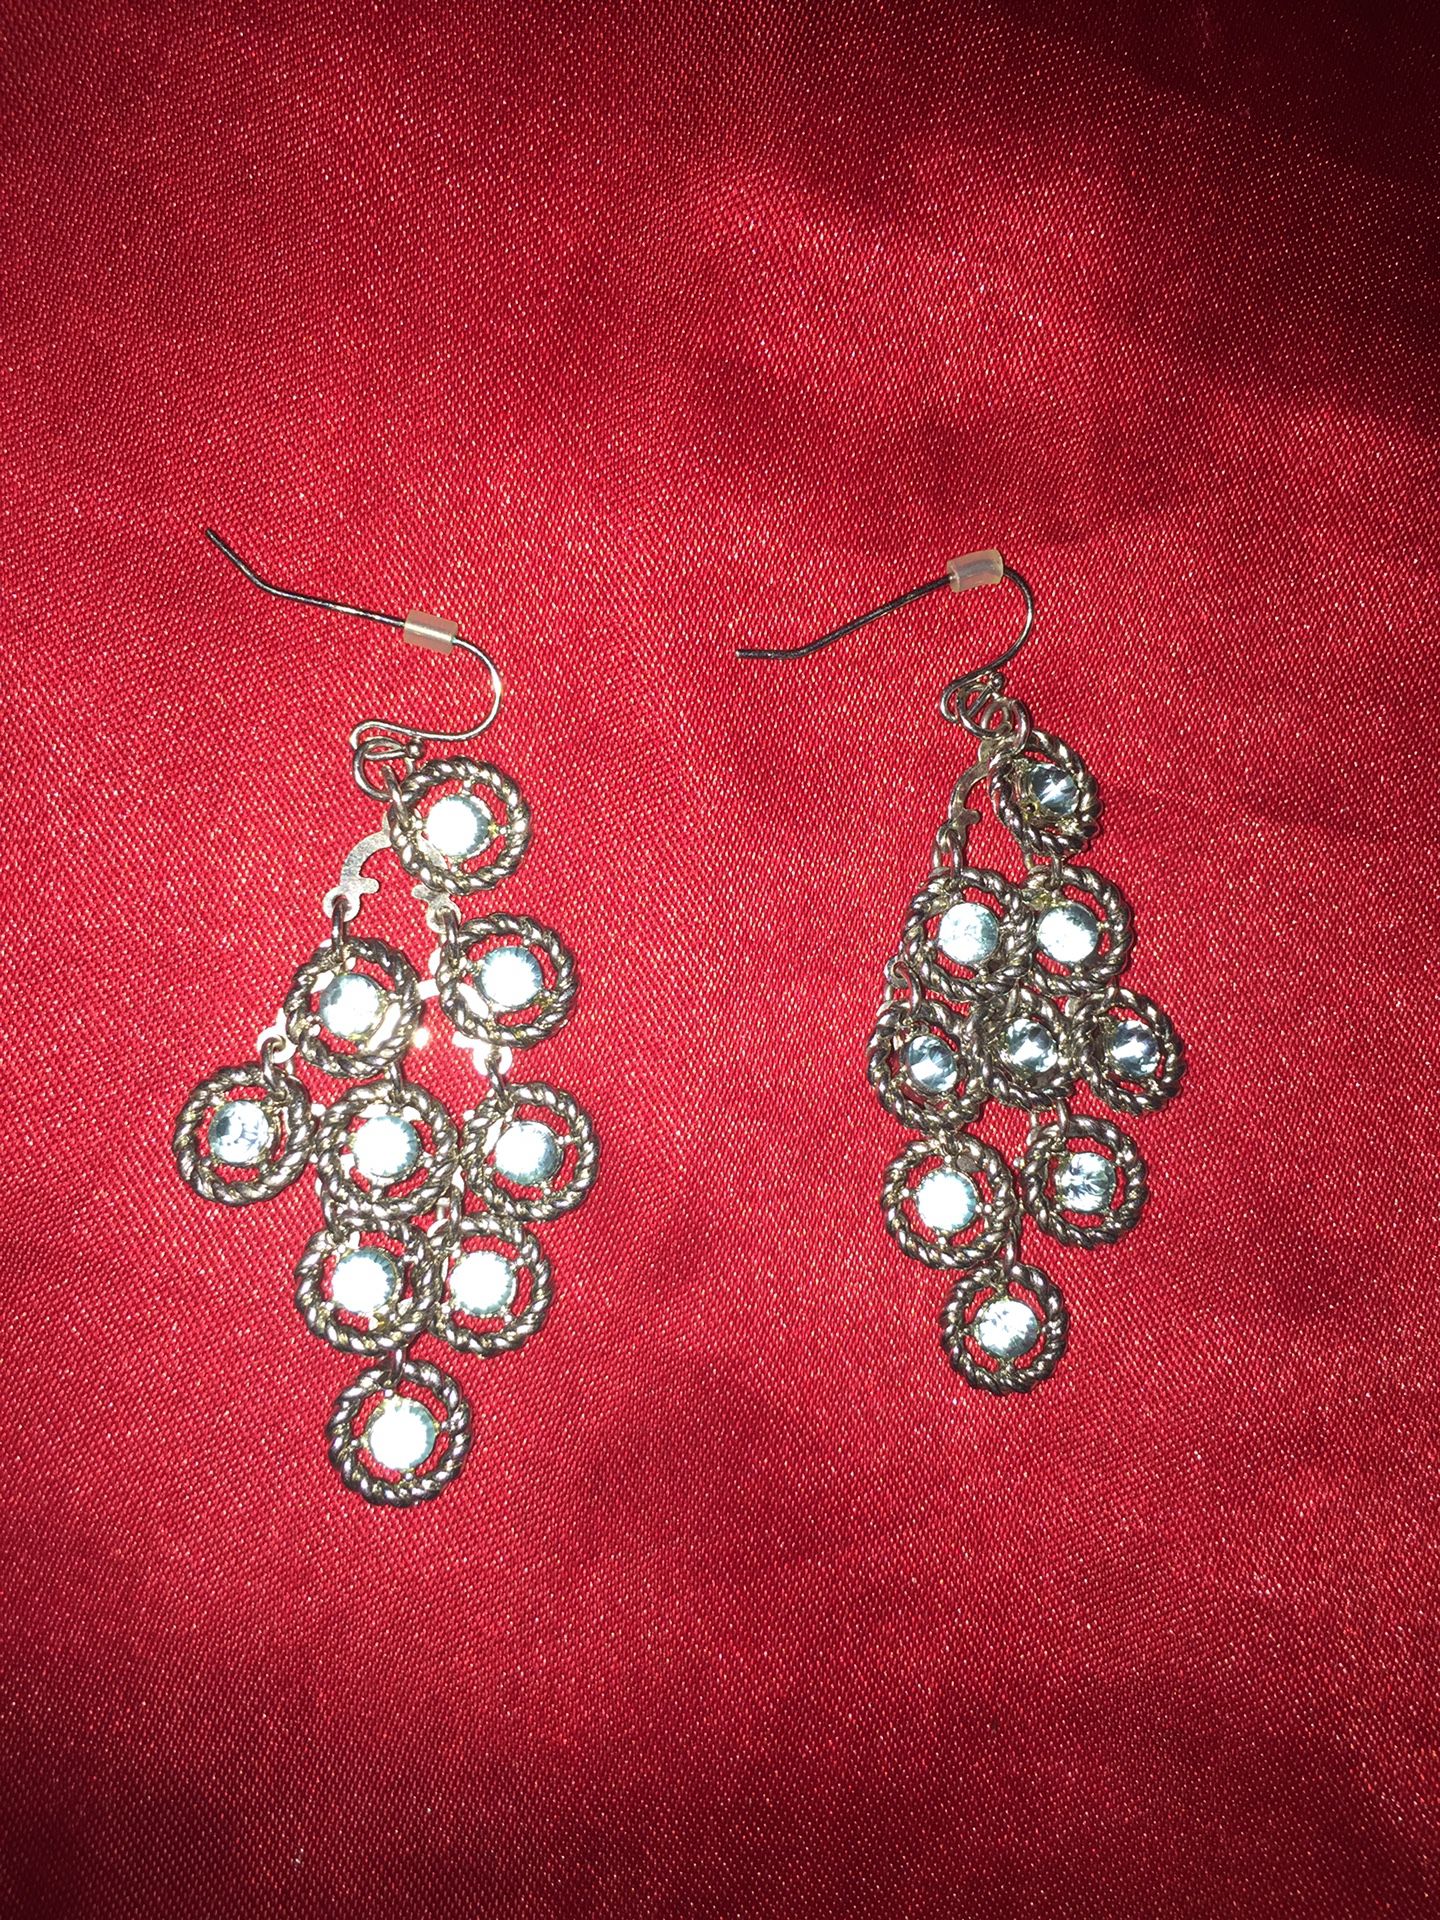 Diamond shaped rhinestone dangle earrings